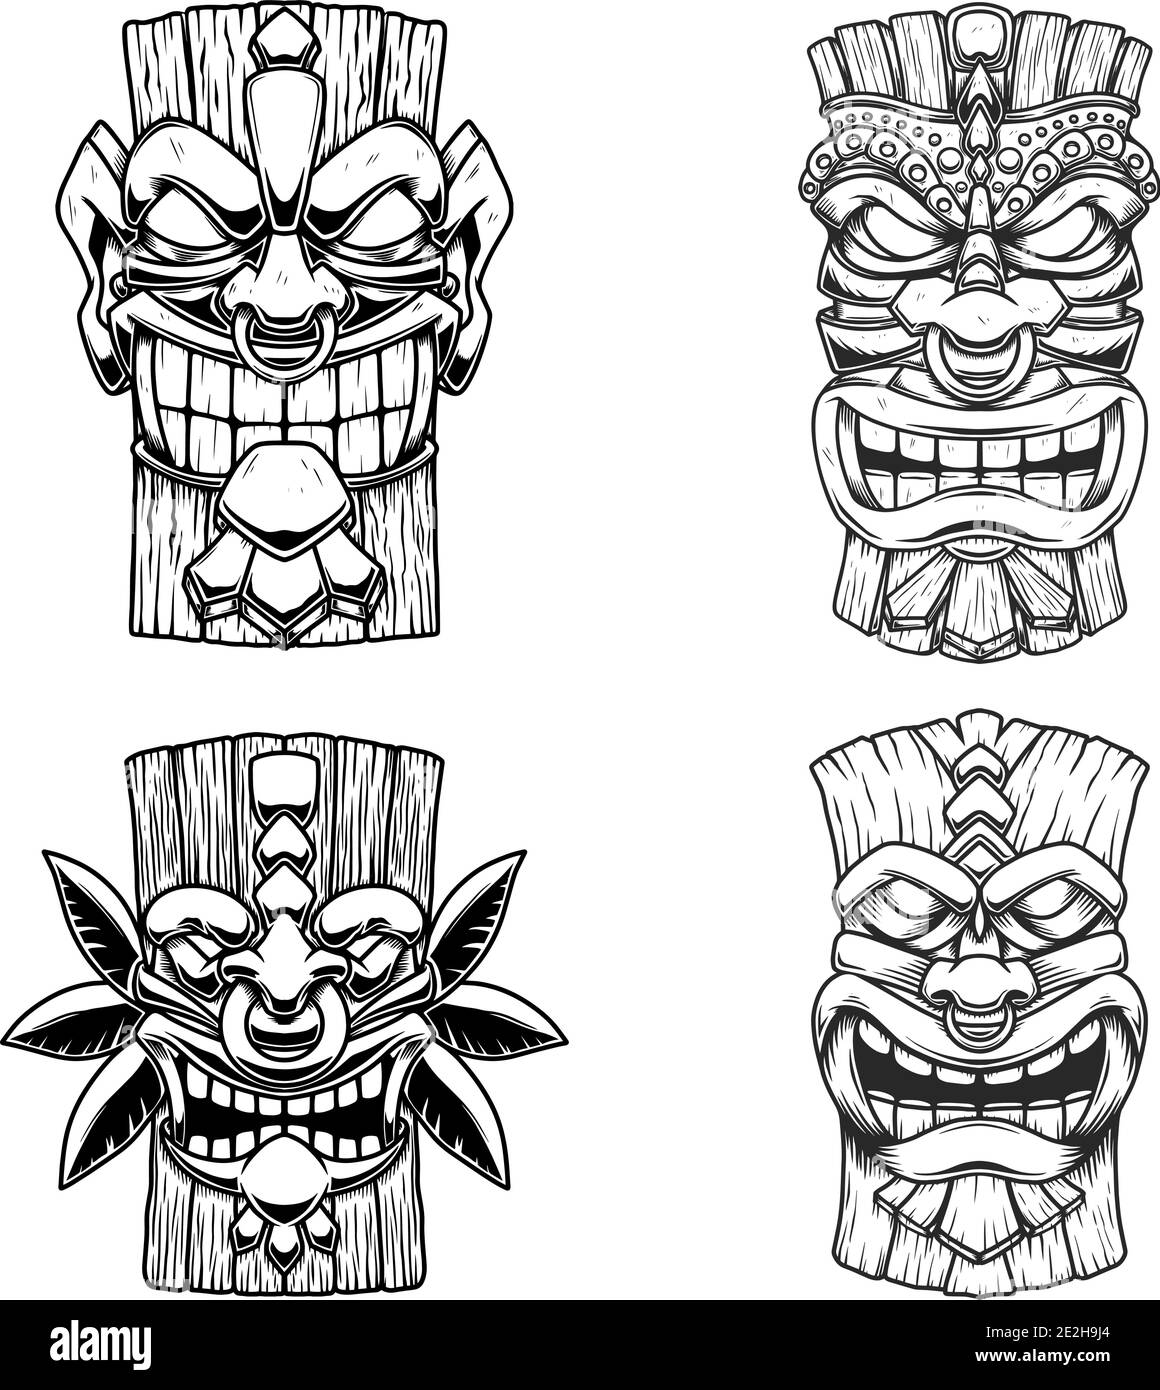 Sет Illustrationen von Tiki Tribal Holzmaske. Gestaltungselement für Logo, Emblem, Schild, Plakat, Karte, Banner. Vektorgrafik Stock Vektor